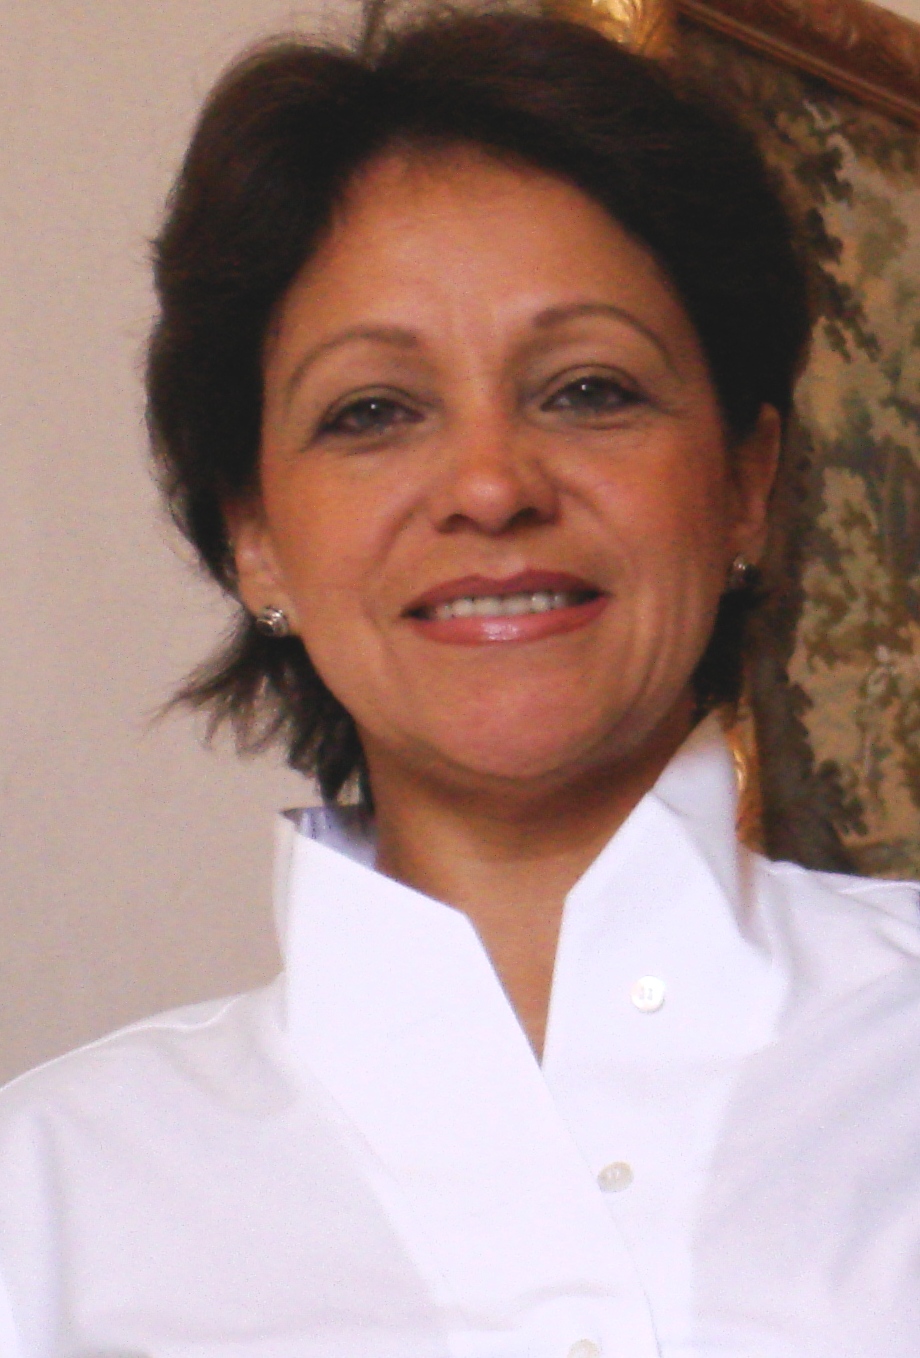 Margarita Cadenas Director - Producer and Writer